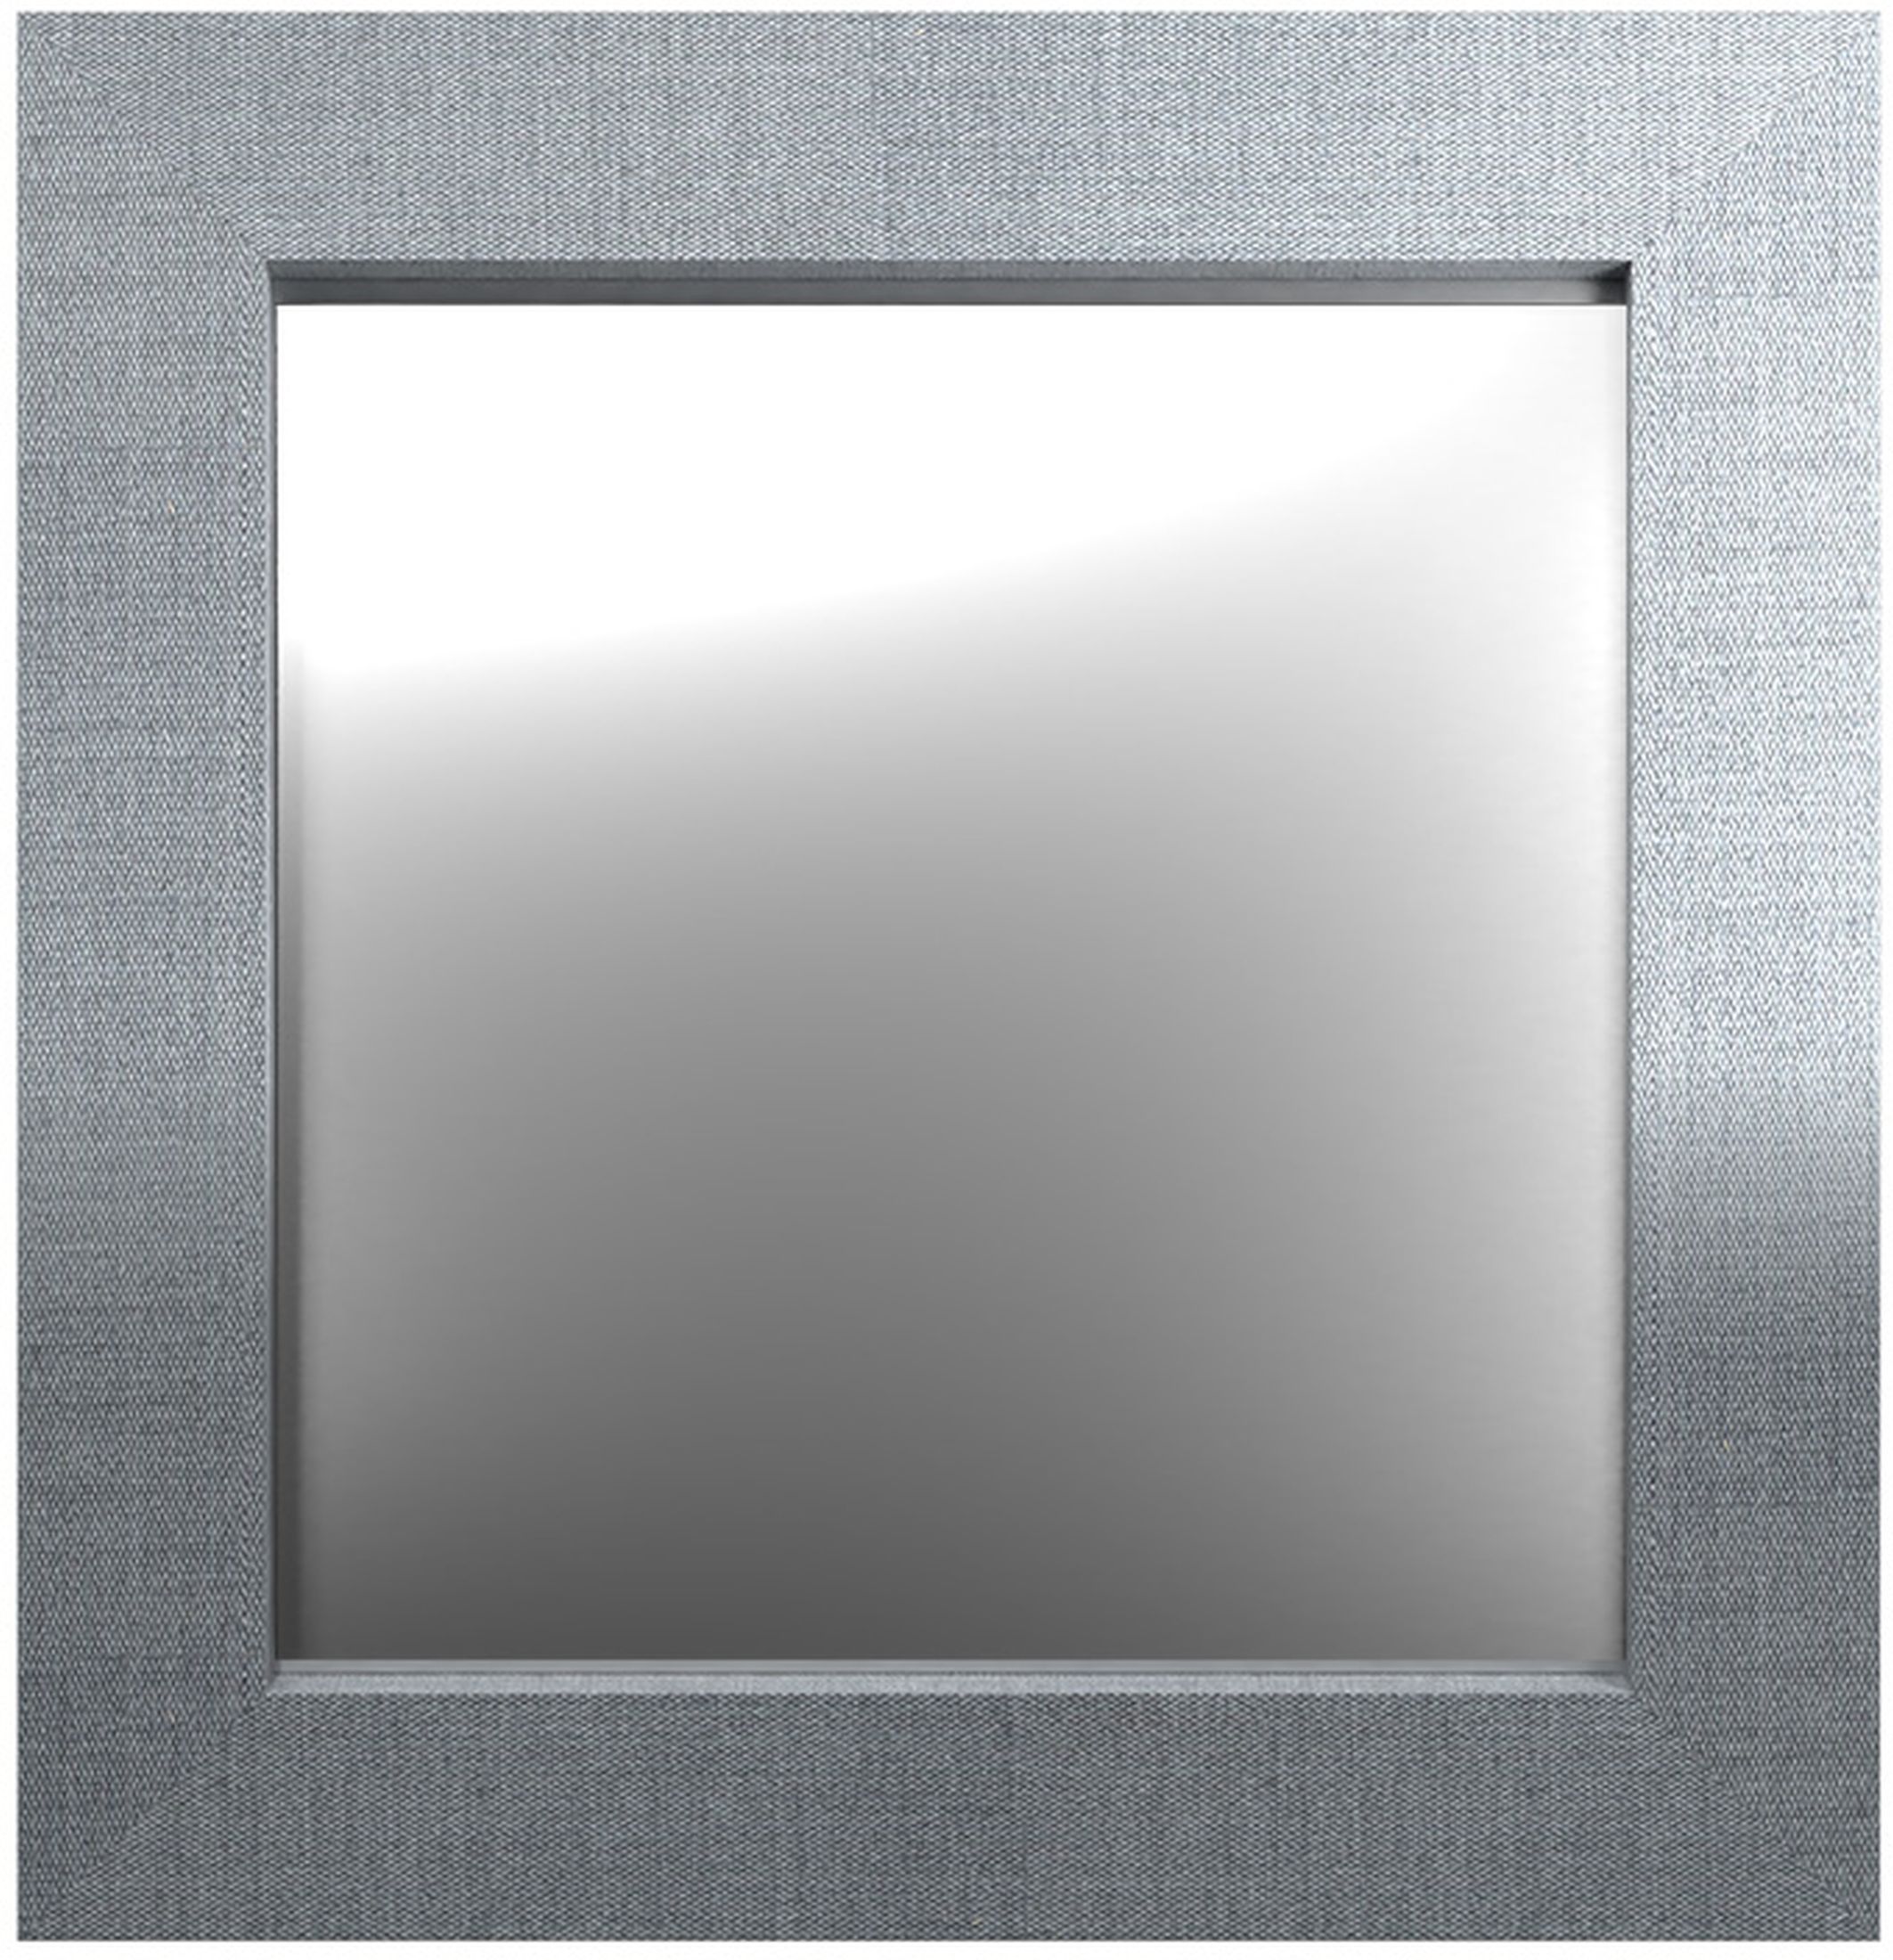 Styler Jyvaskyla zrcadlo 60x60 cm čtvercový LU-12324